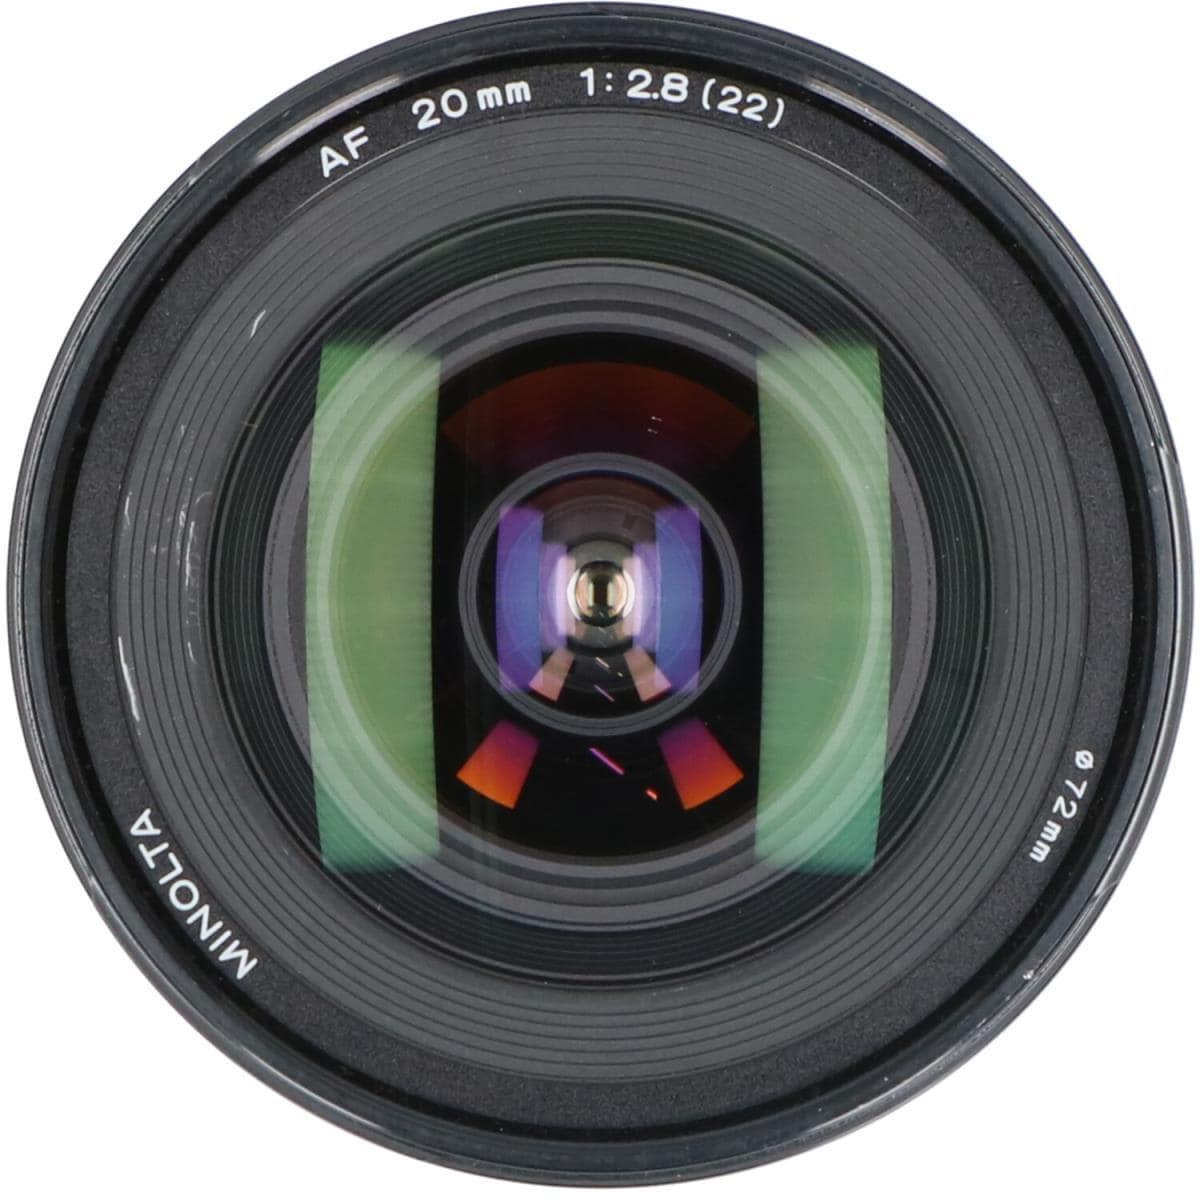 KOMEHYO |MINOLTA AF20mm f/2.8|美能達|相機|可更換鏡頭|自動對焦鏡頭